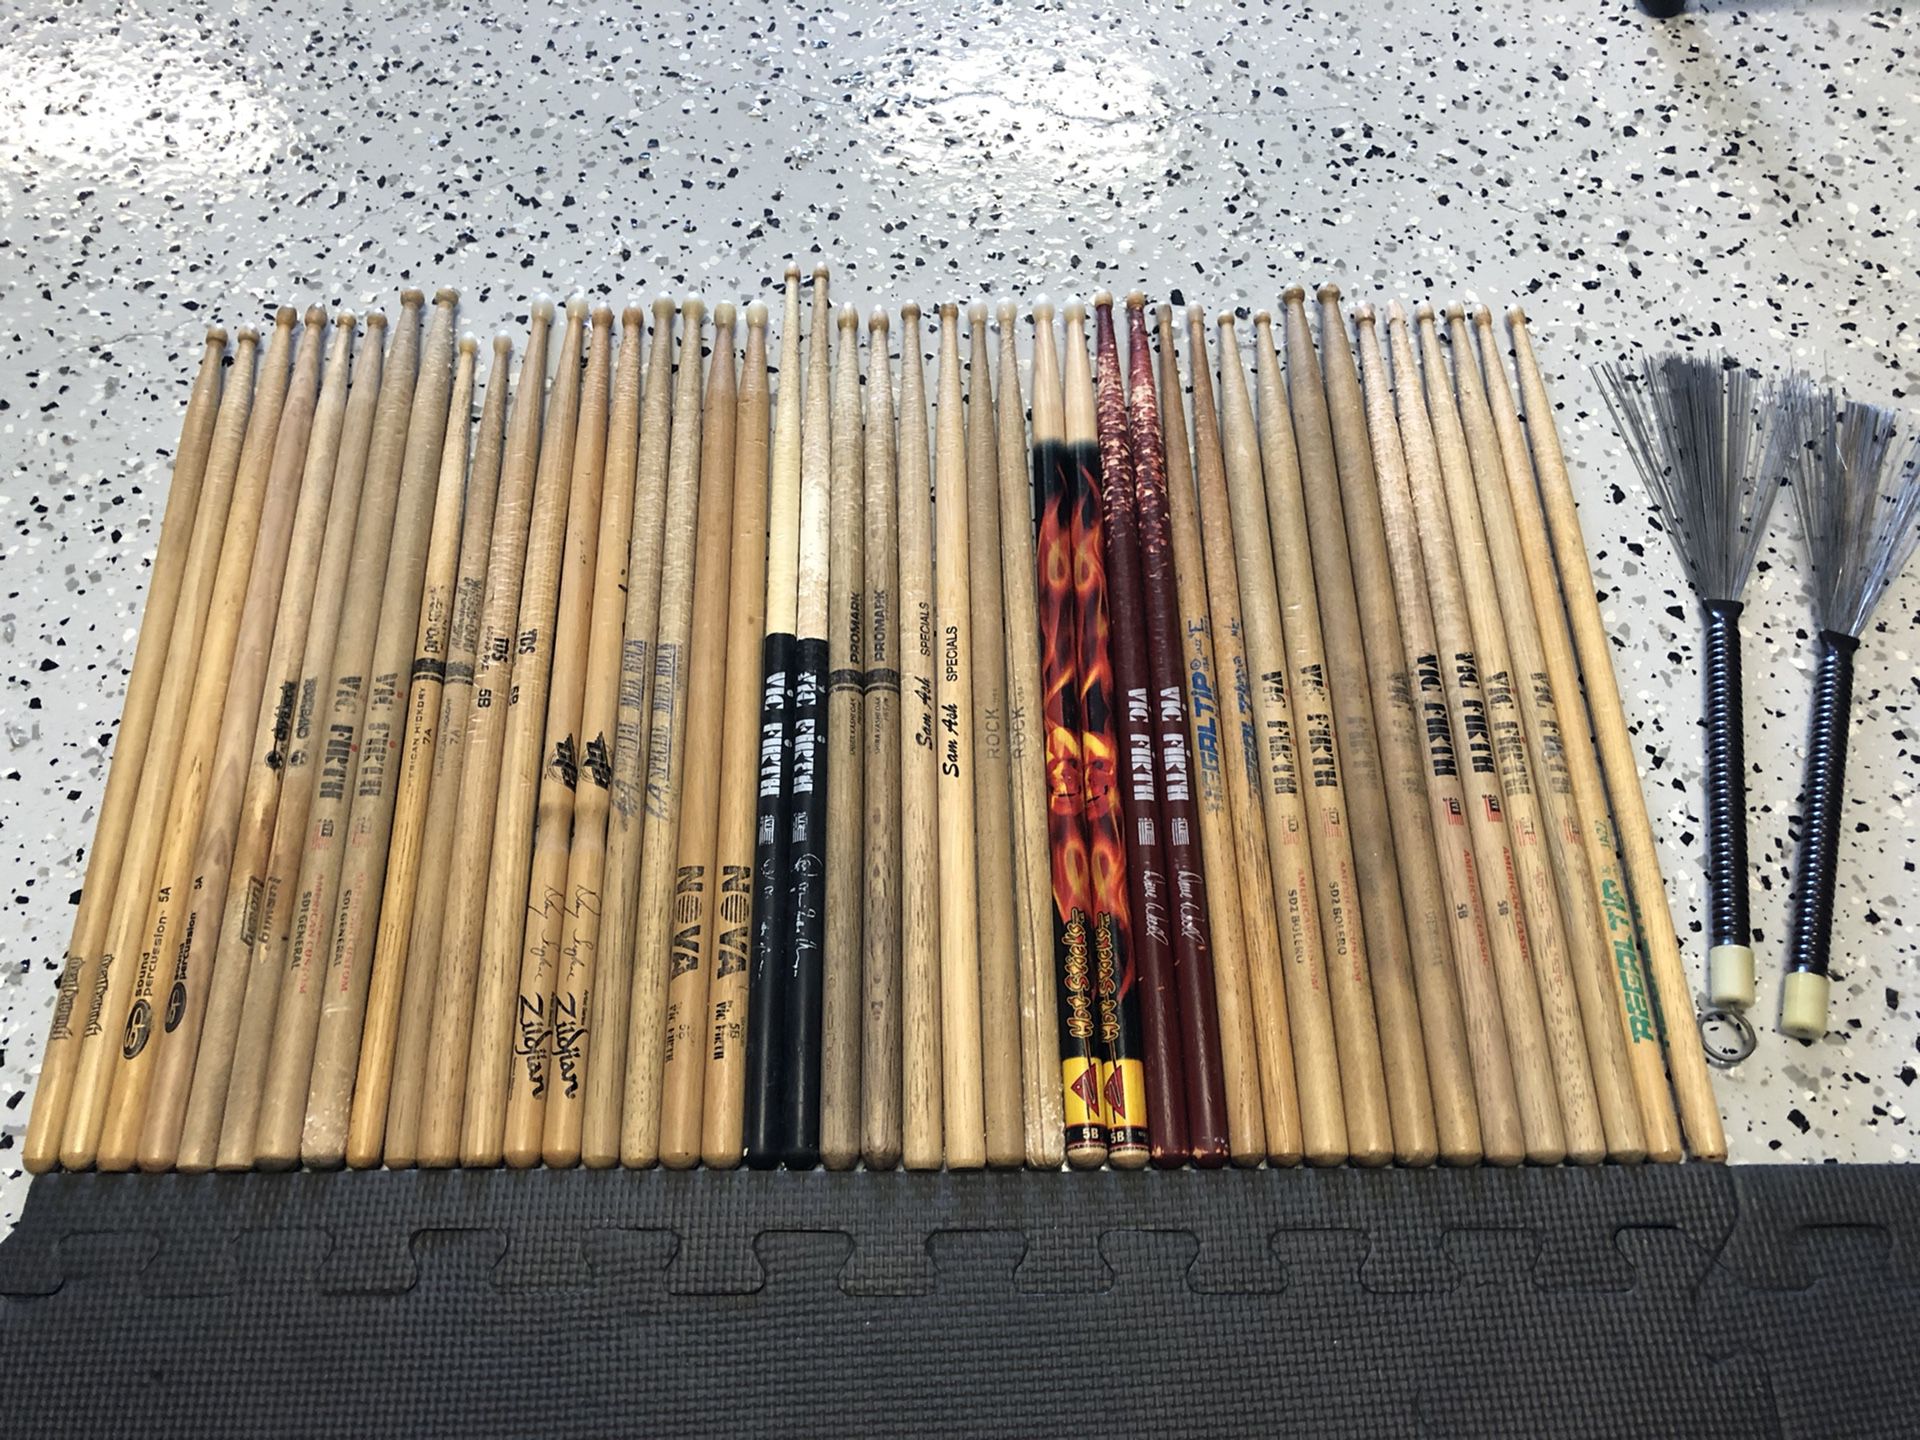 Used Drum Sticks $1/pair